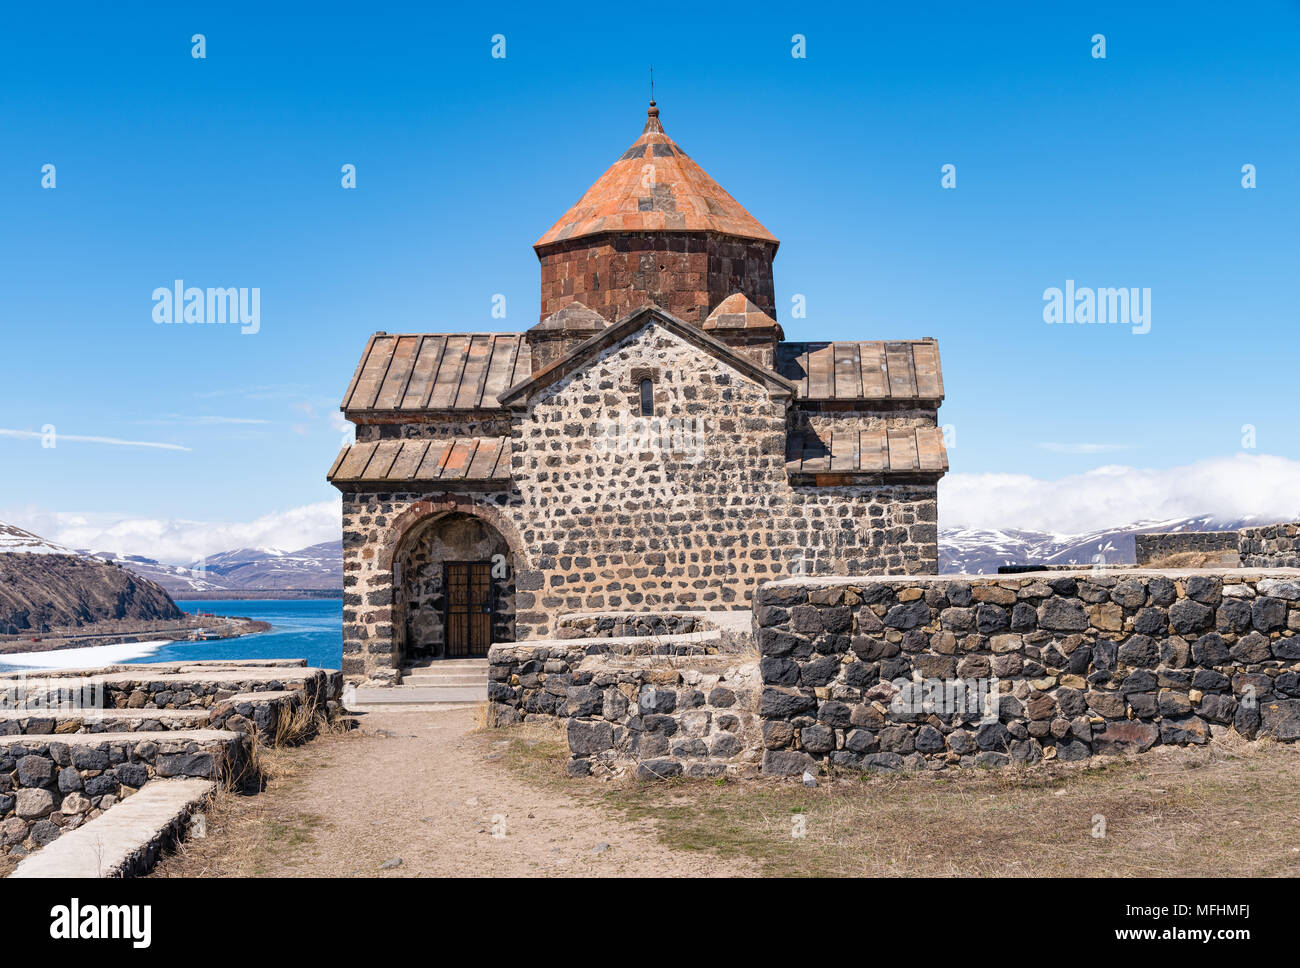 Sevan, Armenia - April 3, 2017: Historic Sevanavank monastery build in 9th century is a major tourist attraction in town of Sevan in Gegharkunik Provi Stock Photo